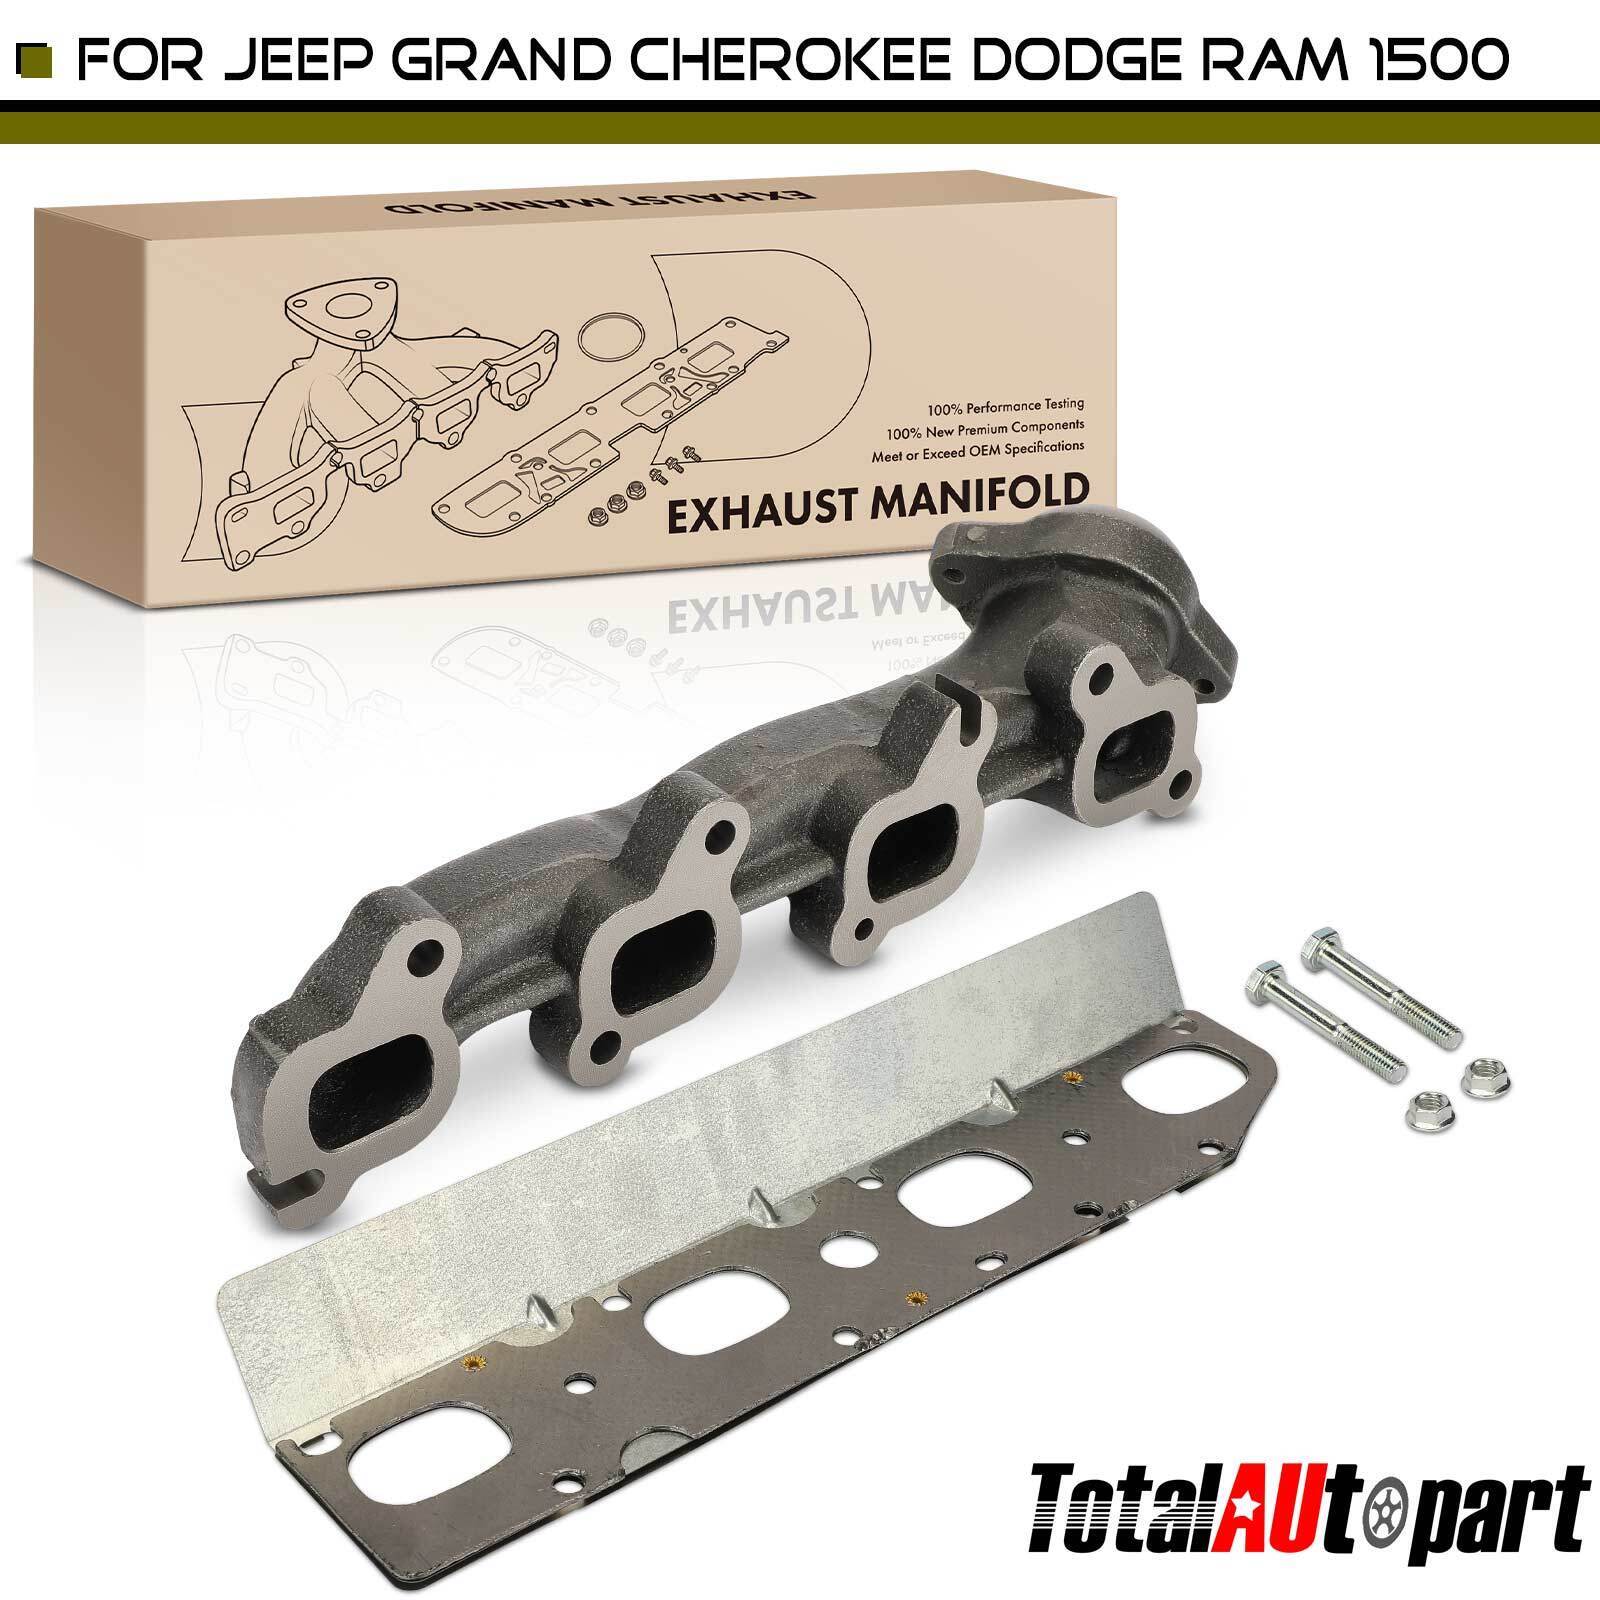 Exhaust Manifold w/ Gasket for Dodge Durango Jeep Grand Cherokee Ram 1500 Left